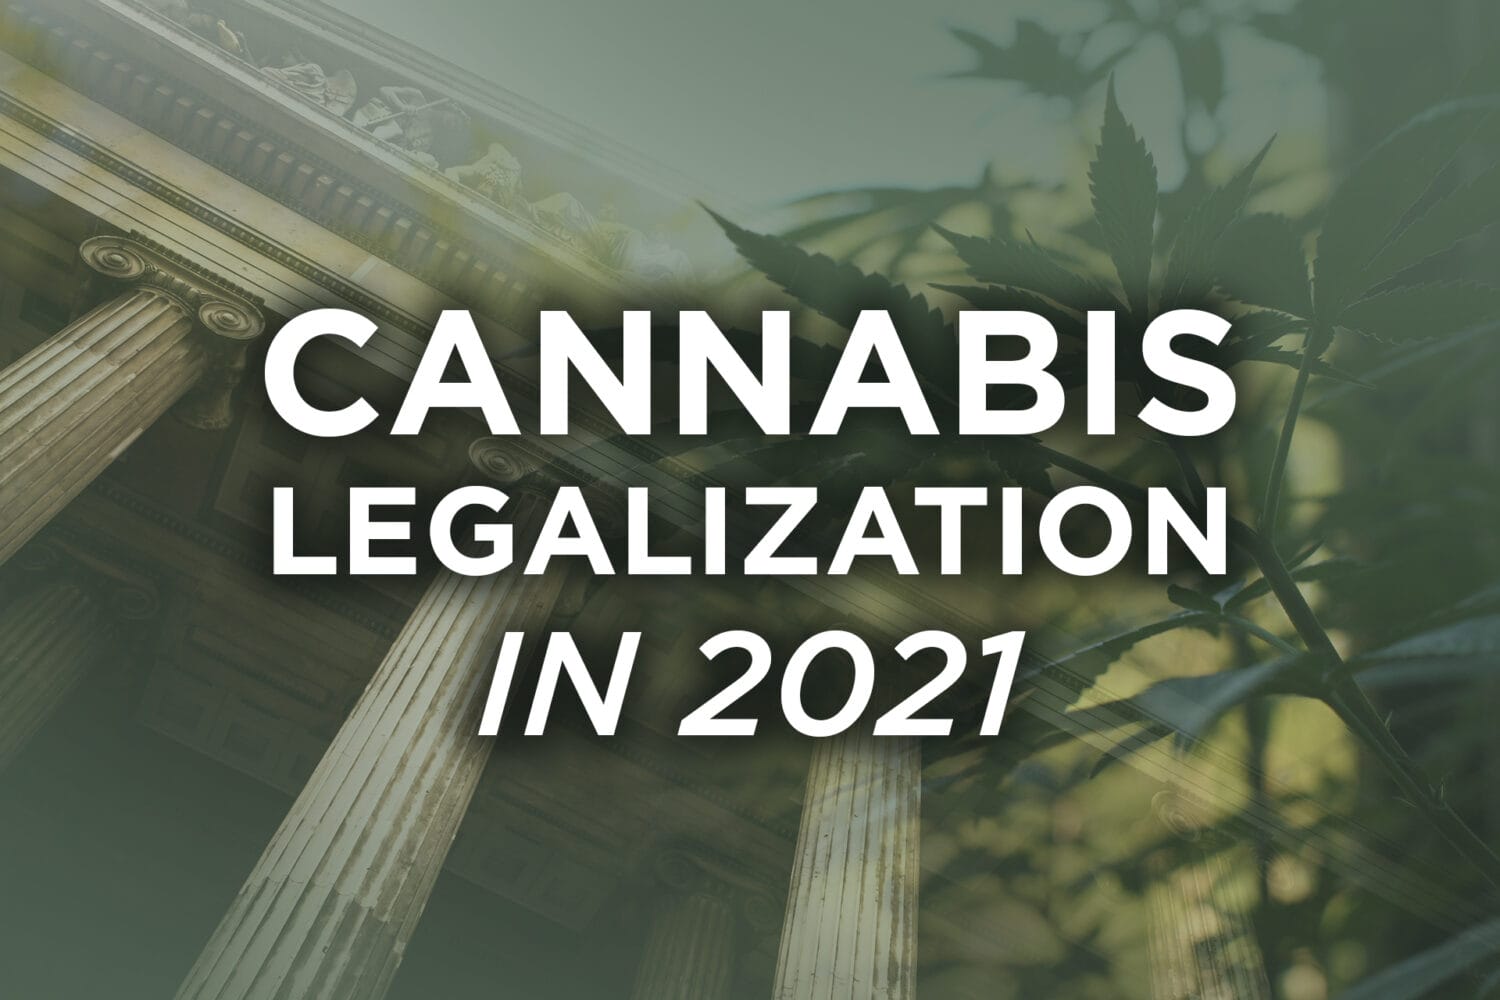 Cannabis Legalization Blog '21 Update